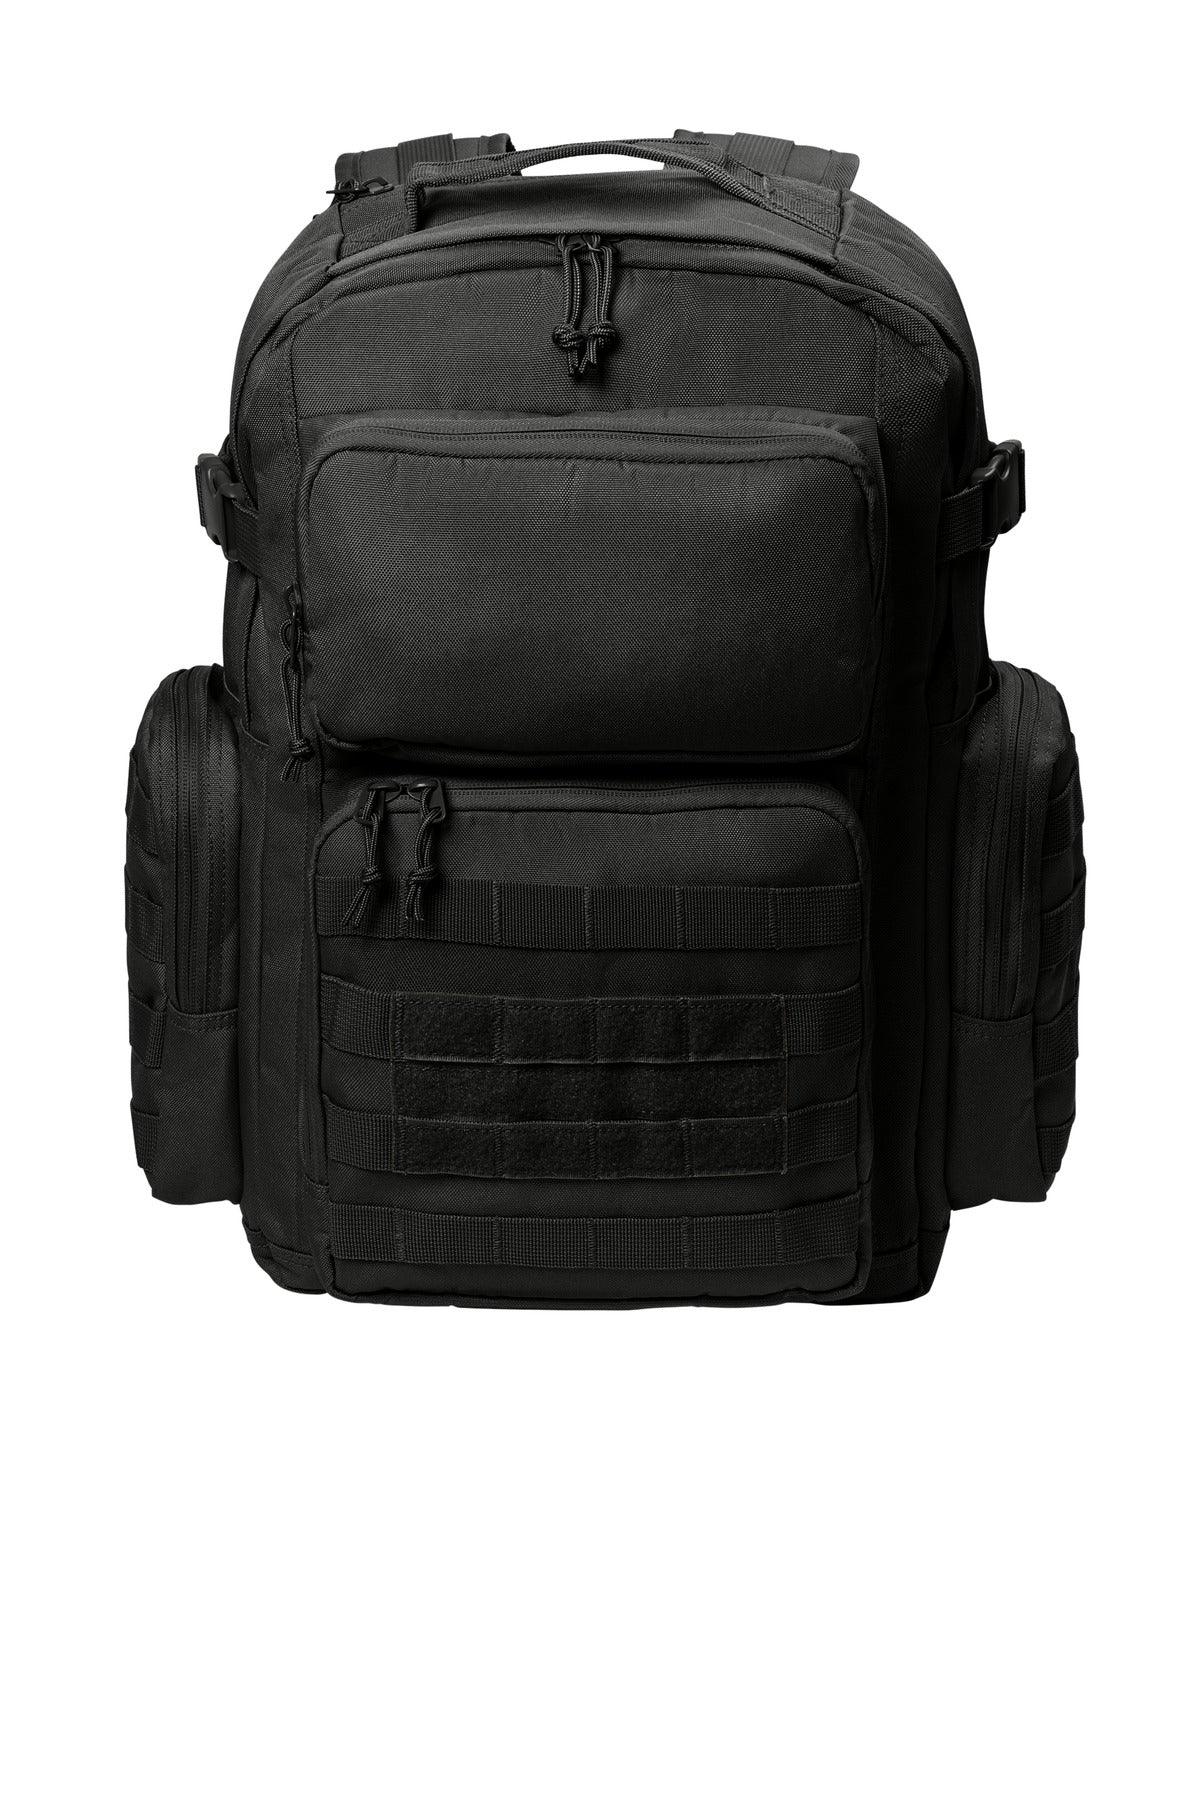 CornerStone Tactical Backpack CSB205 - Dresses Max